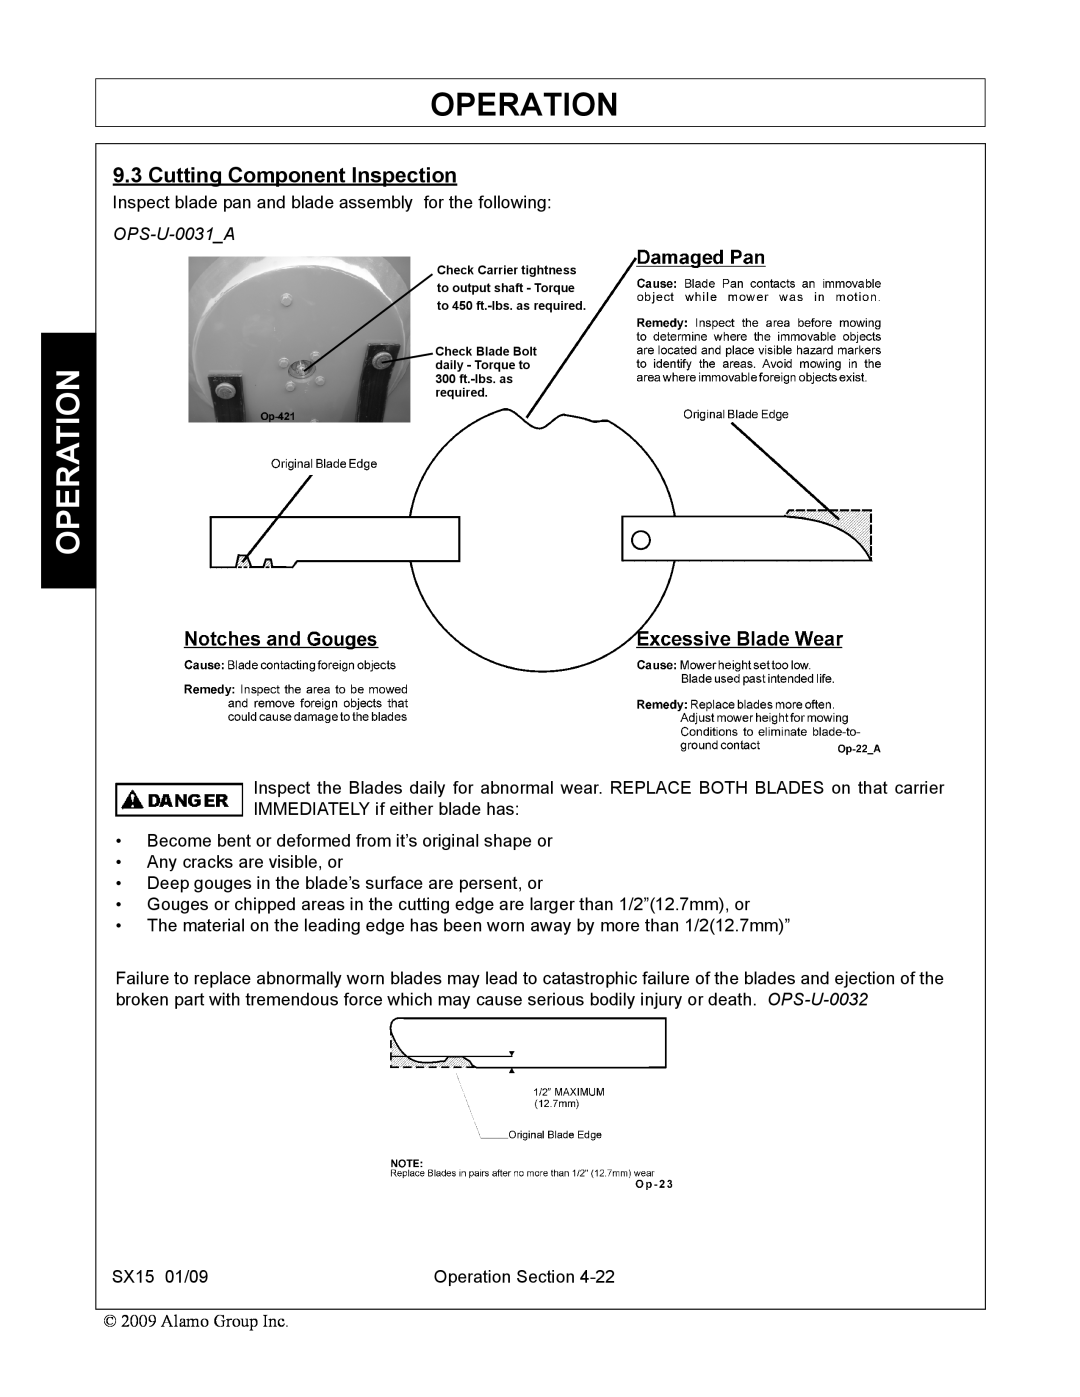 Alamo SX15 manual Cutting Component Inspection, Operation, OPS-U-0031A 